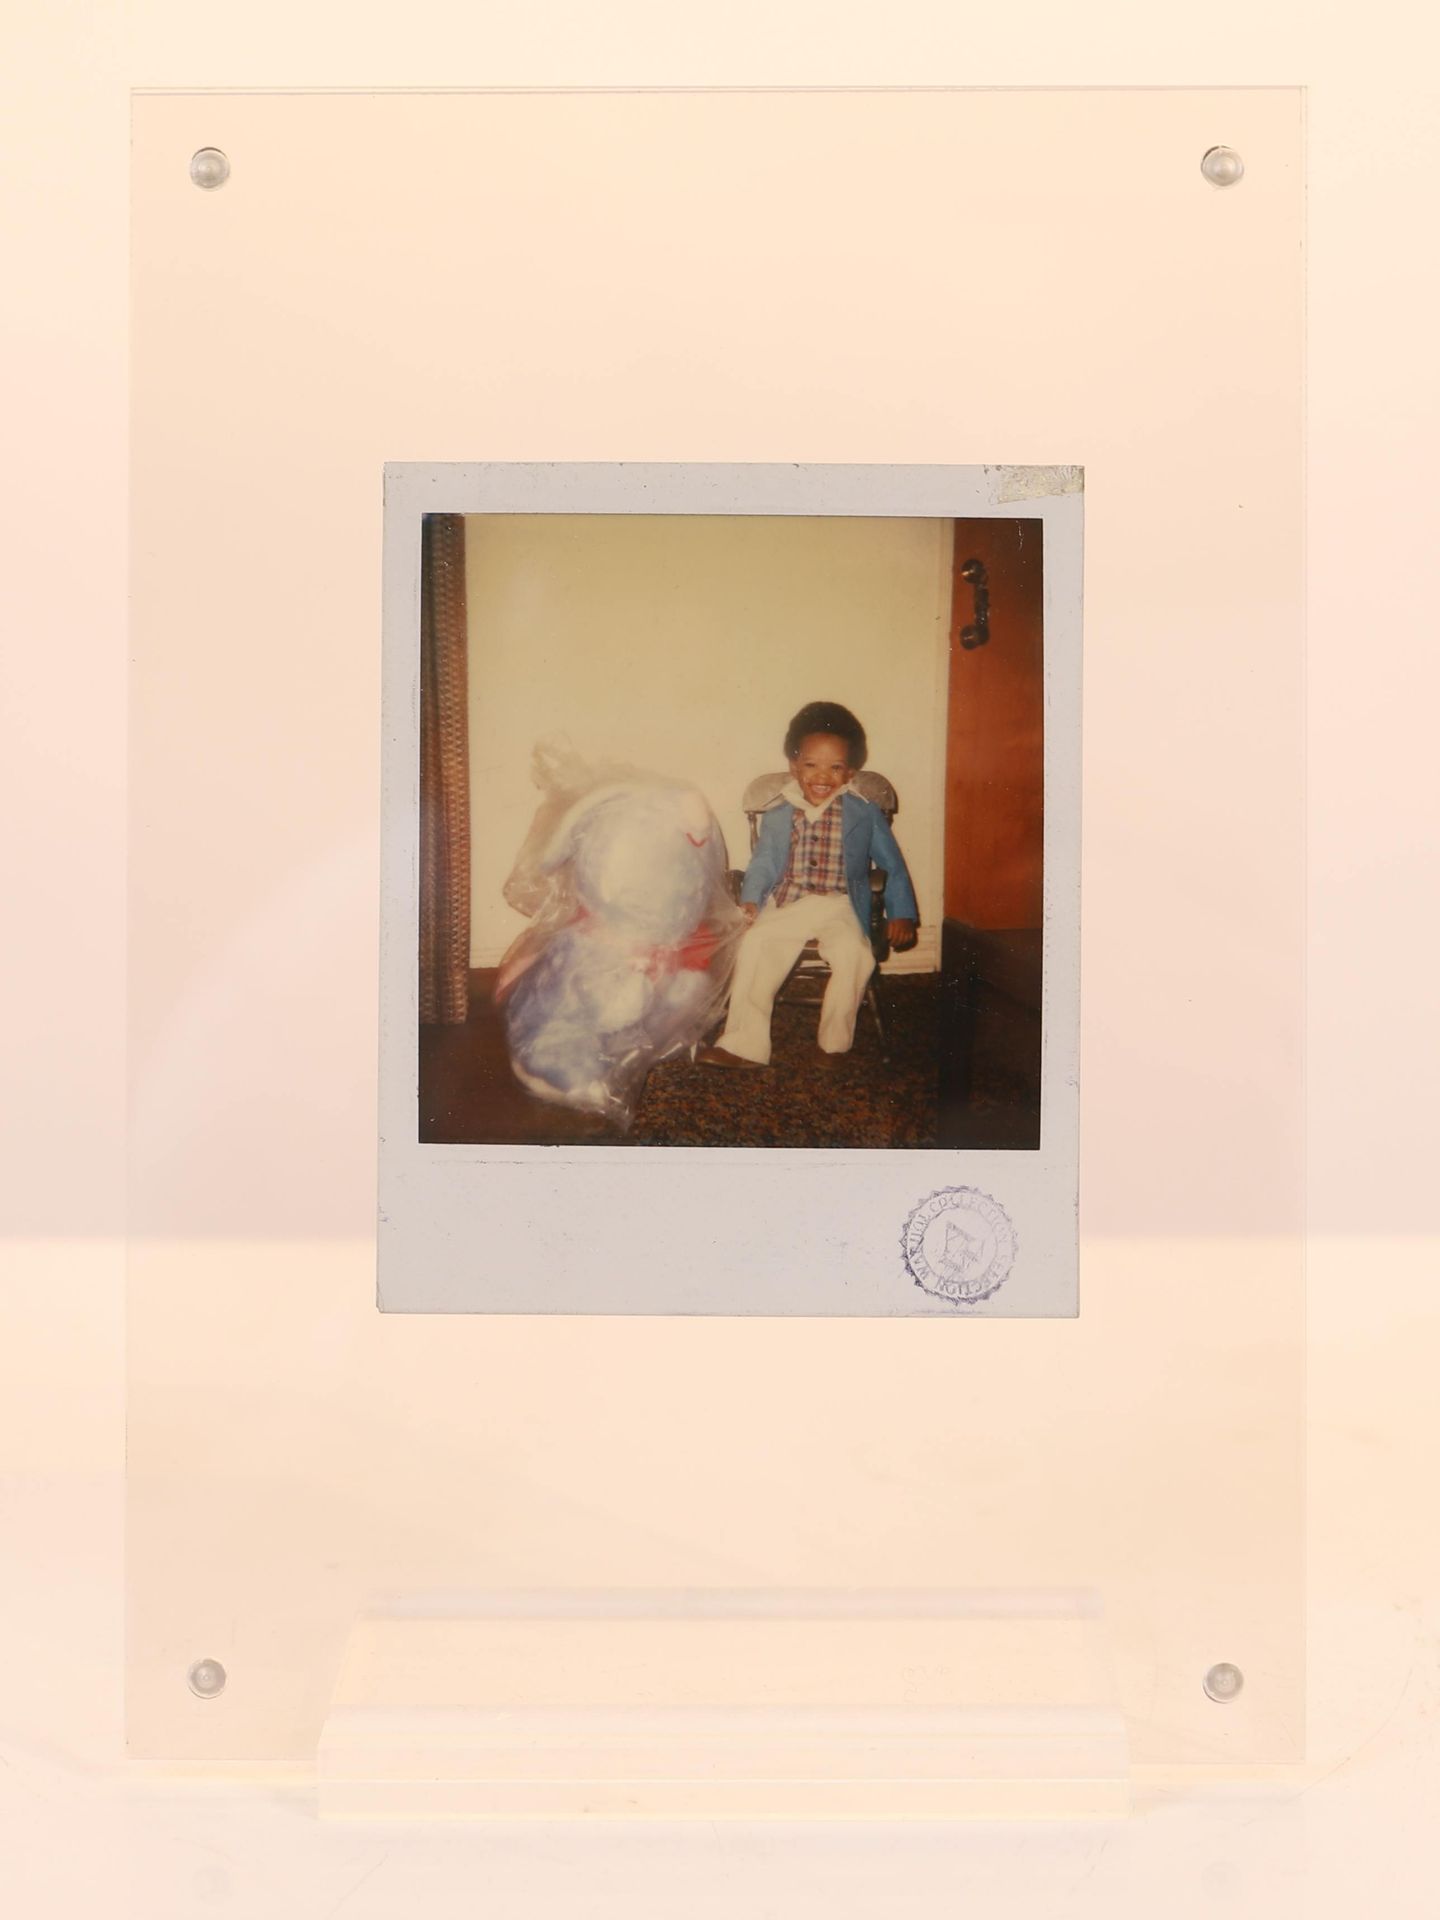 Null 安迪-沃霍尔(1928-1987)

带有 "安迪-沃霍尔 "印章的原始宝丽来照片。

尺寸：高：21,5；宽：15厘米